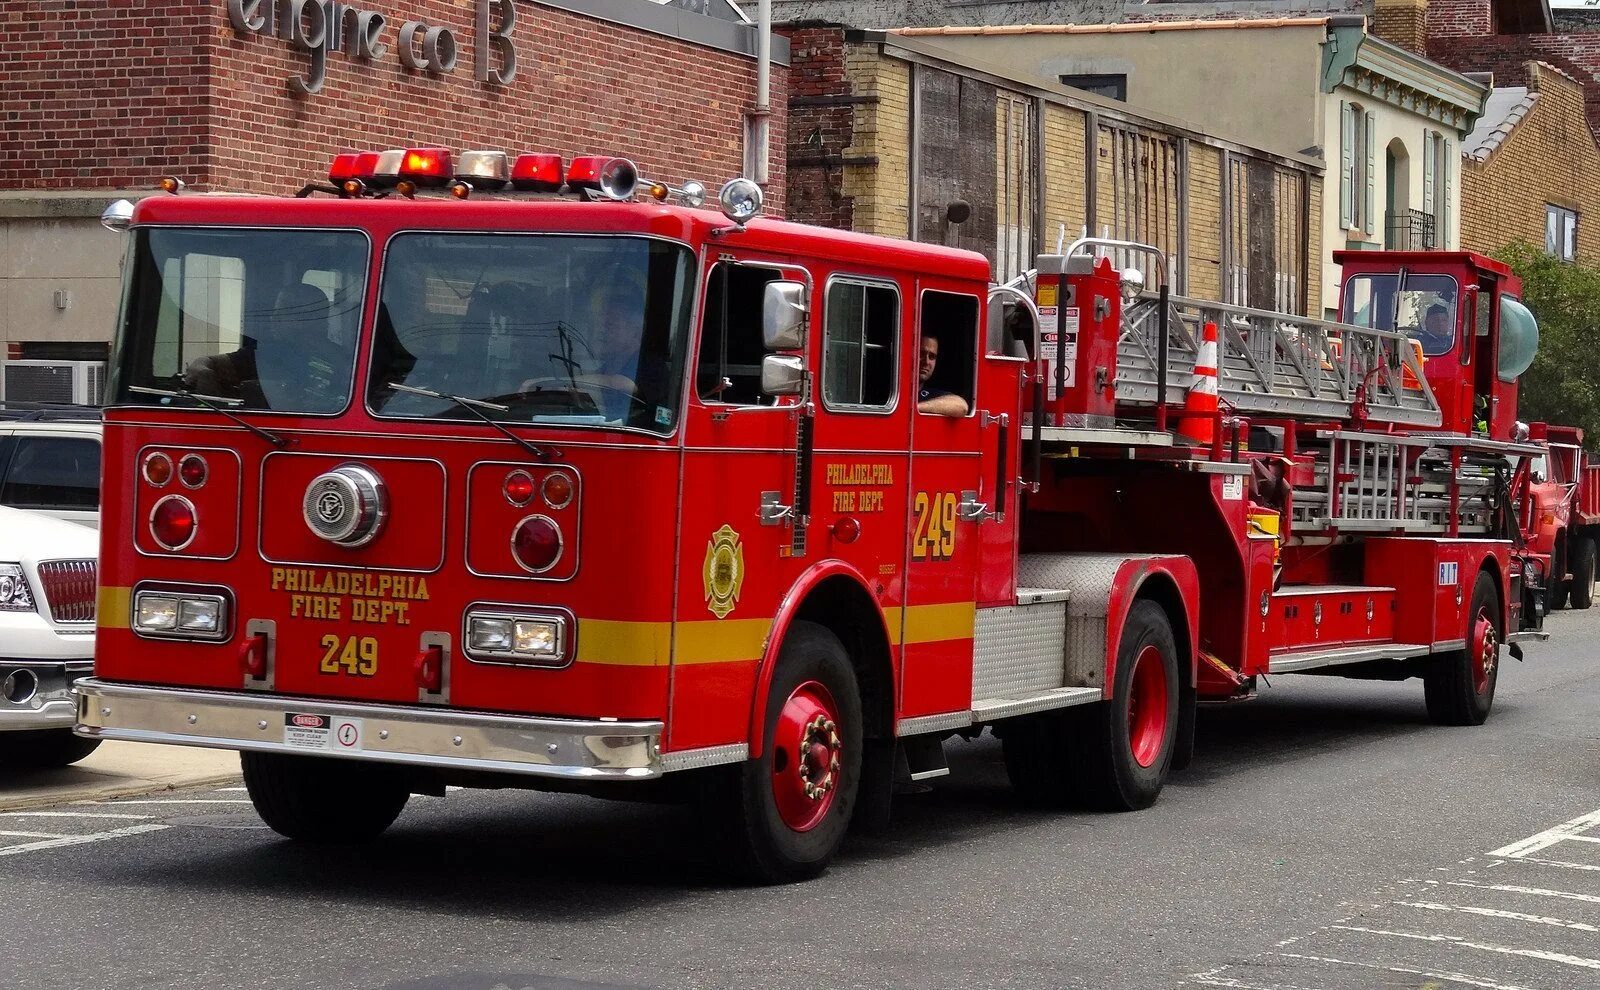 Машина "Fire Truck" пожарная, 49450. Пожарные машины Fire Ladder Truck. Seagrave Fire engine Ladder. Машина "Fire Truck" пожарная, 49450 салон.